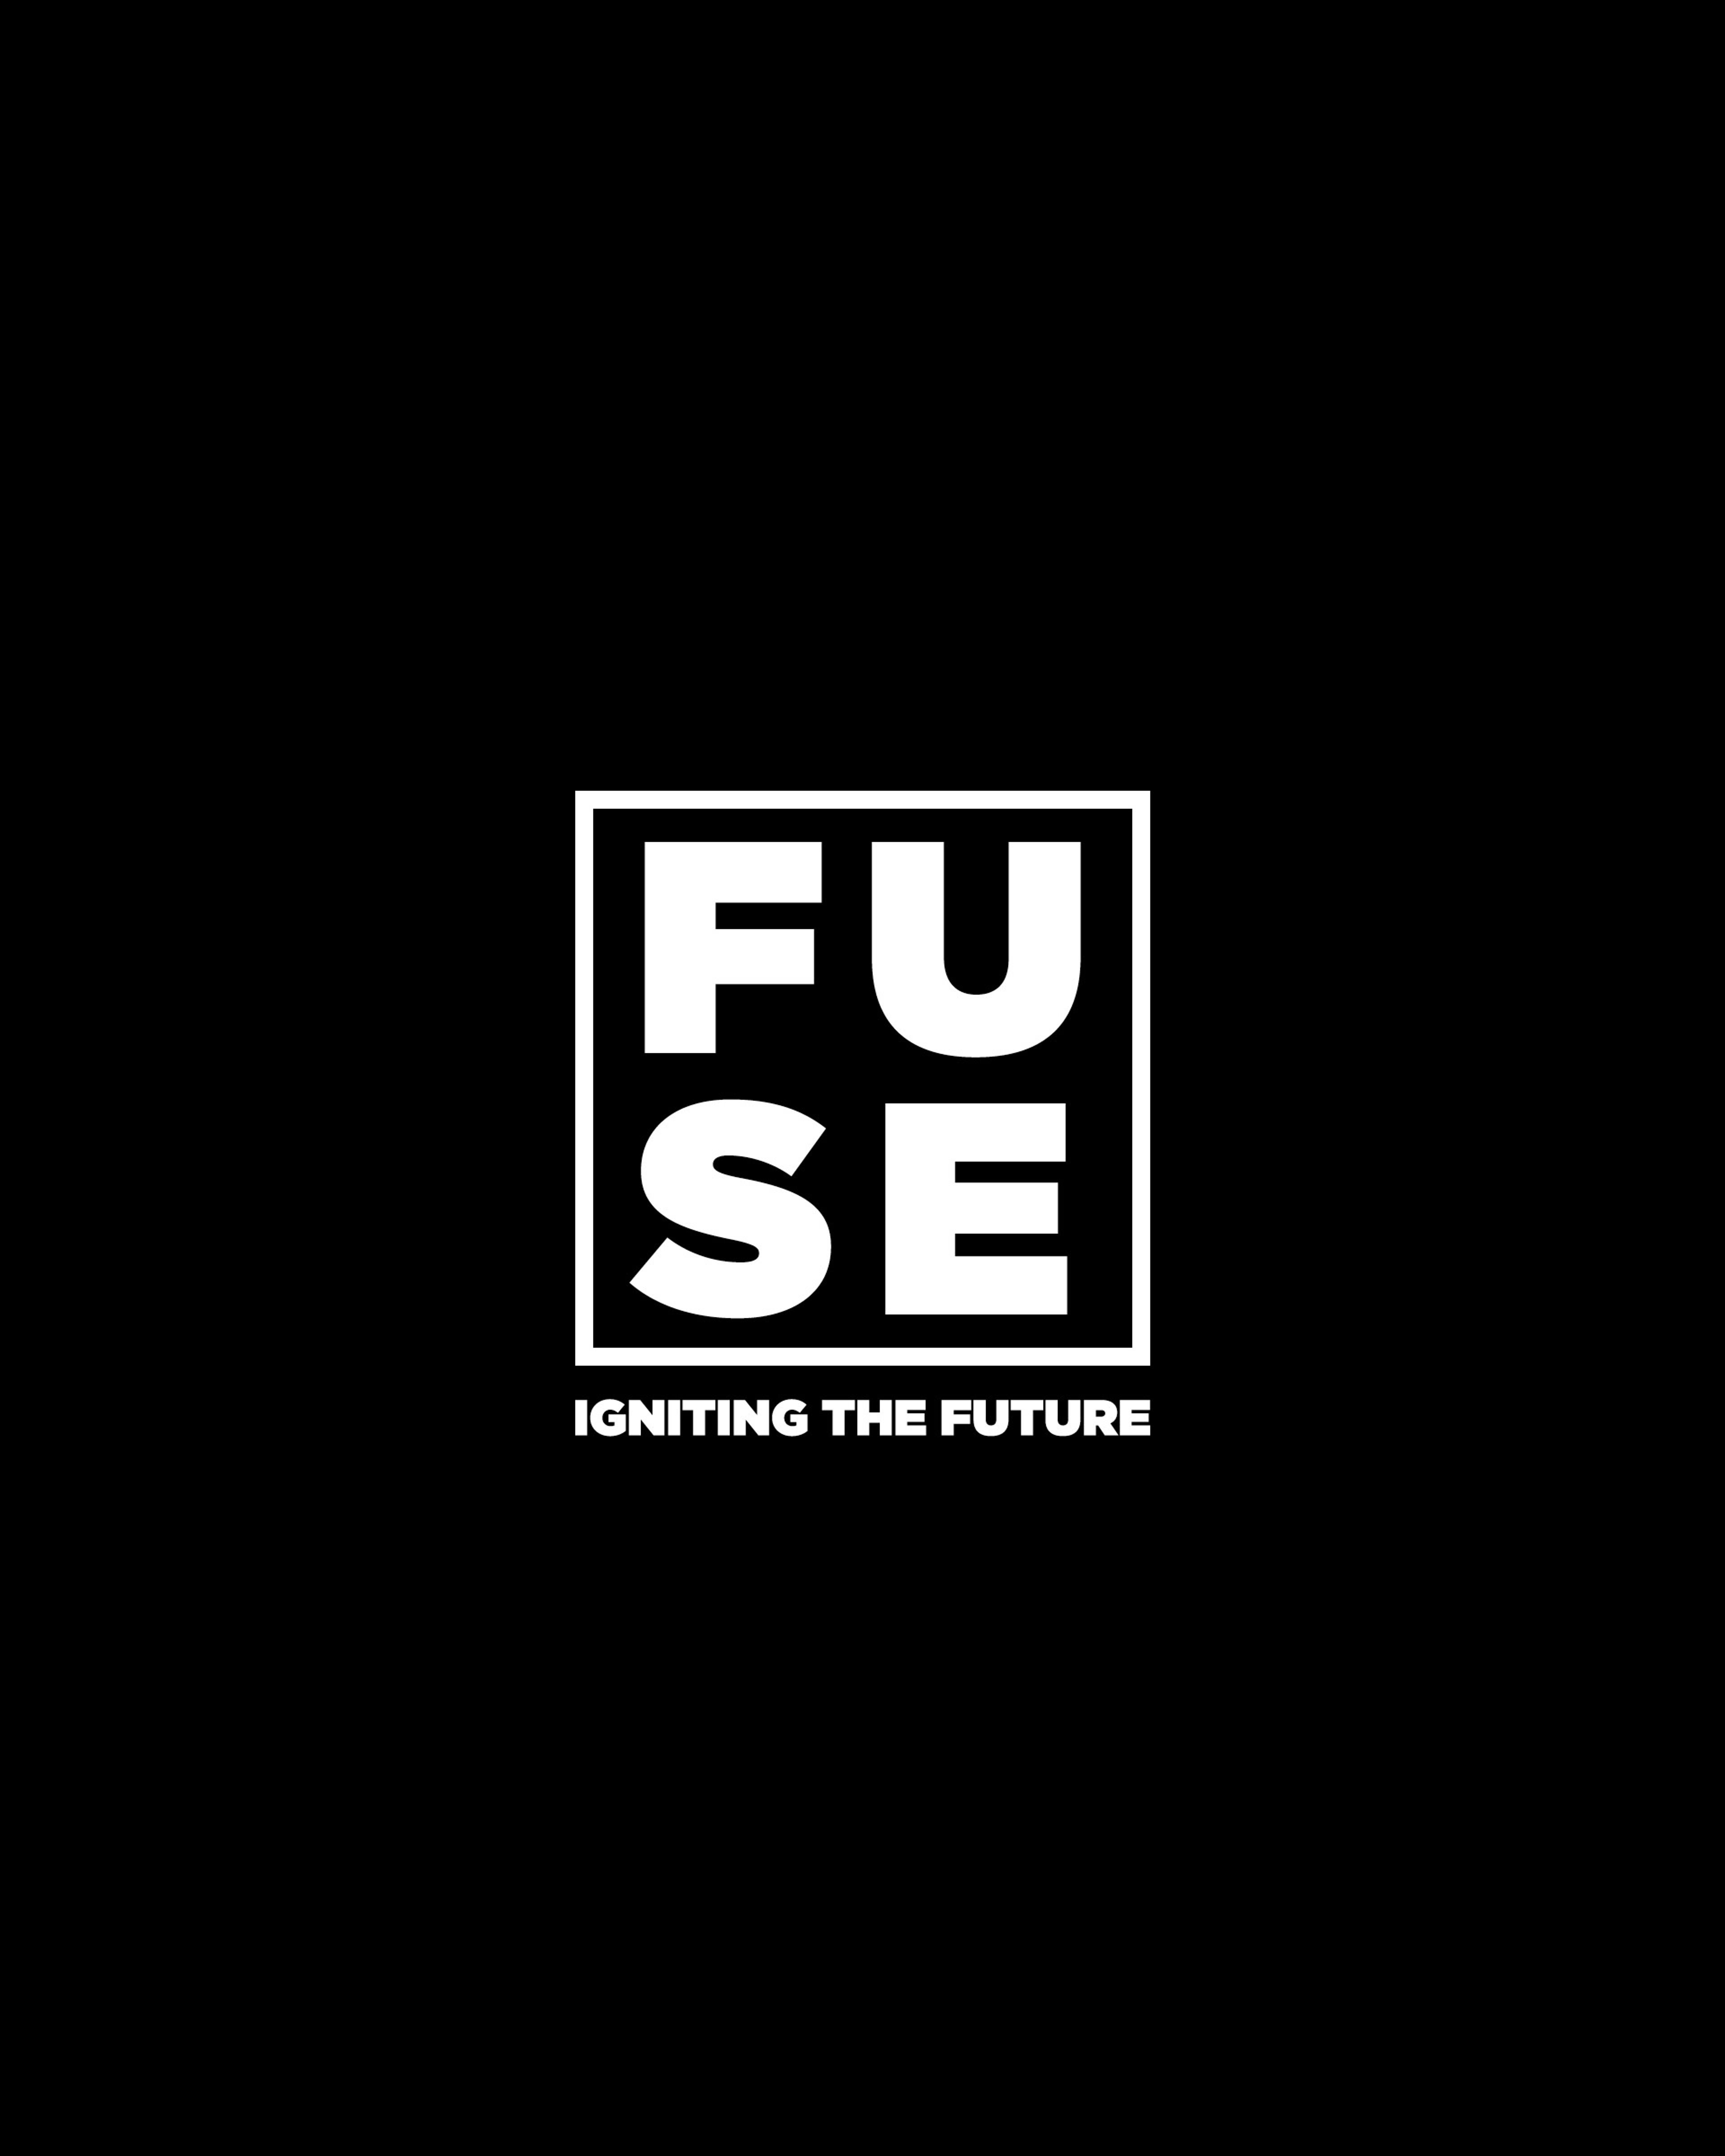 FUSE logo branding